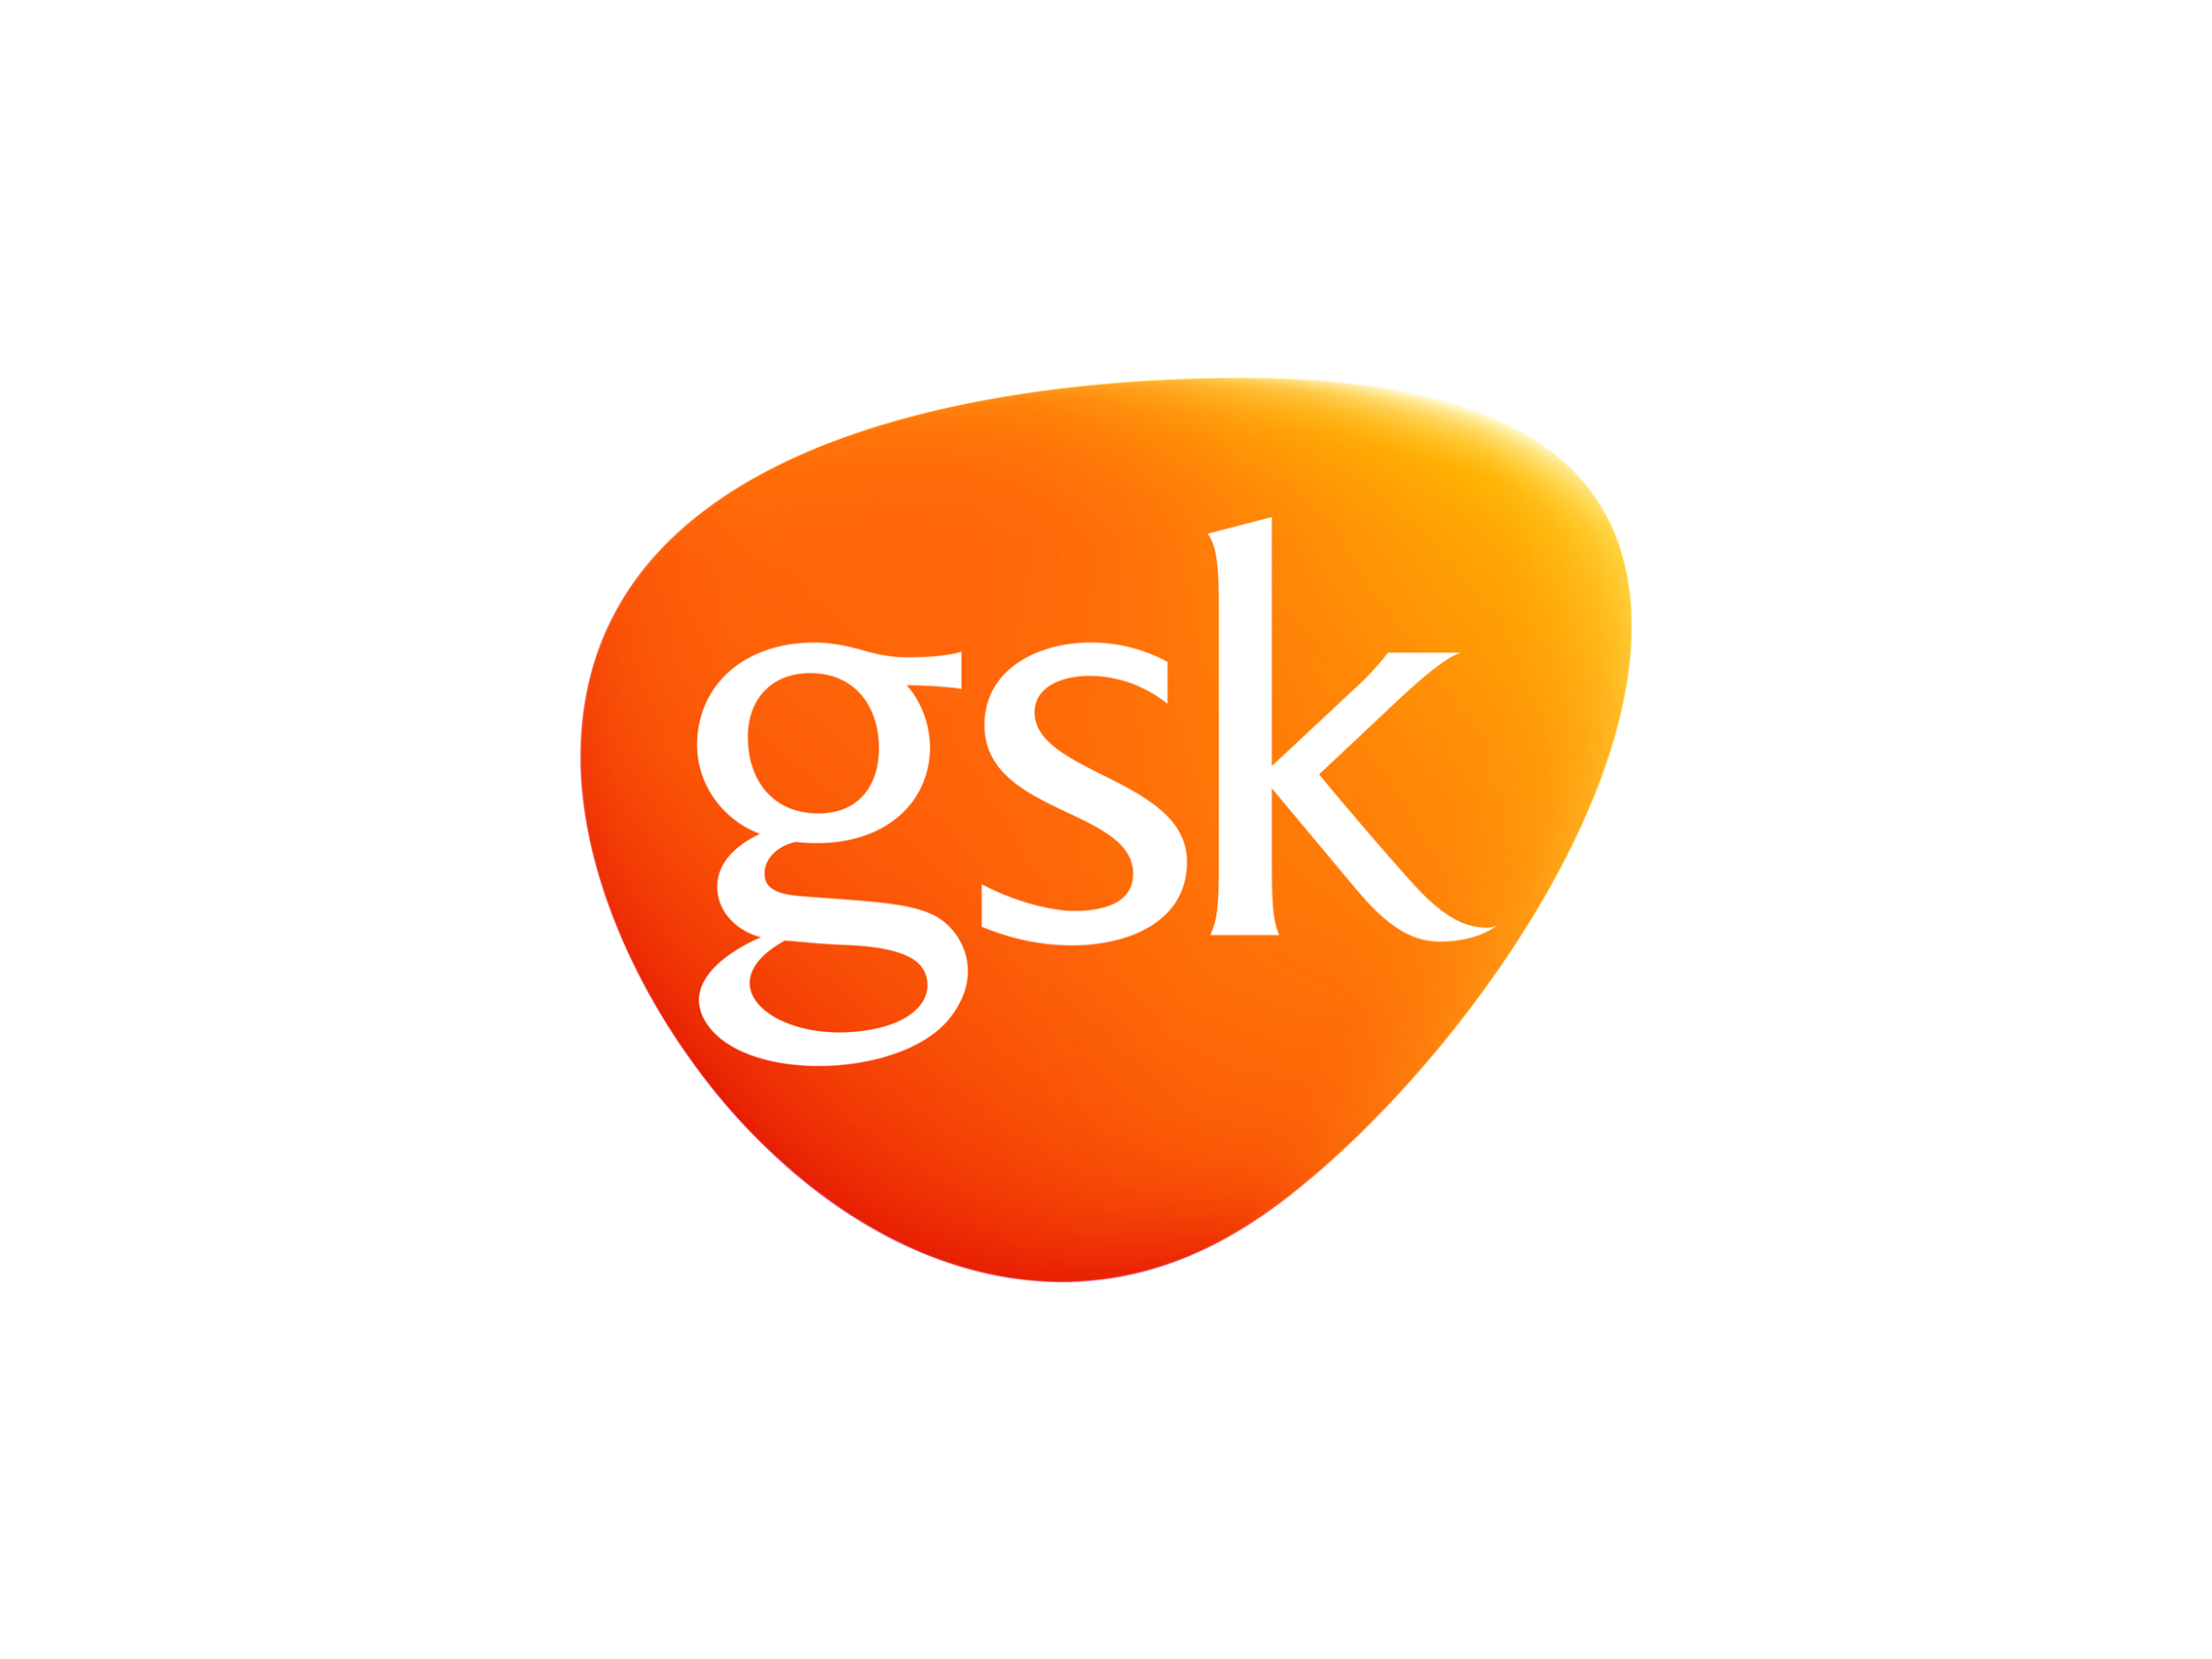 Image of the GSK logo